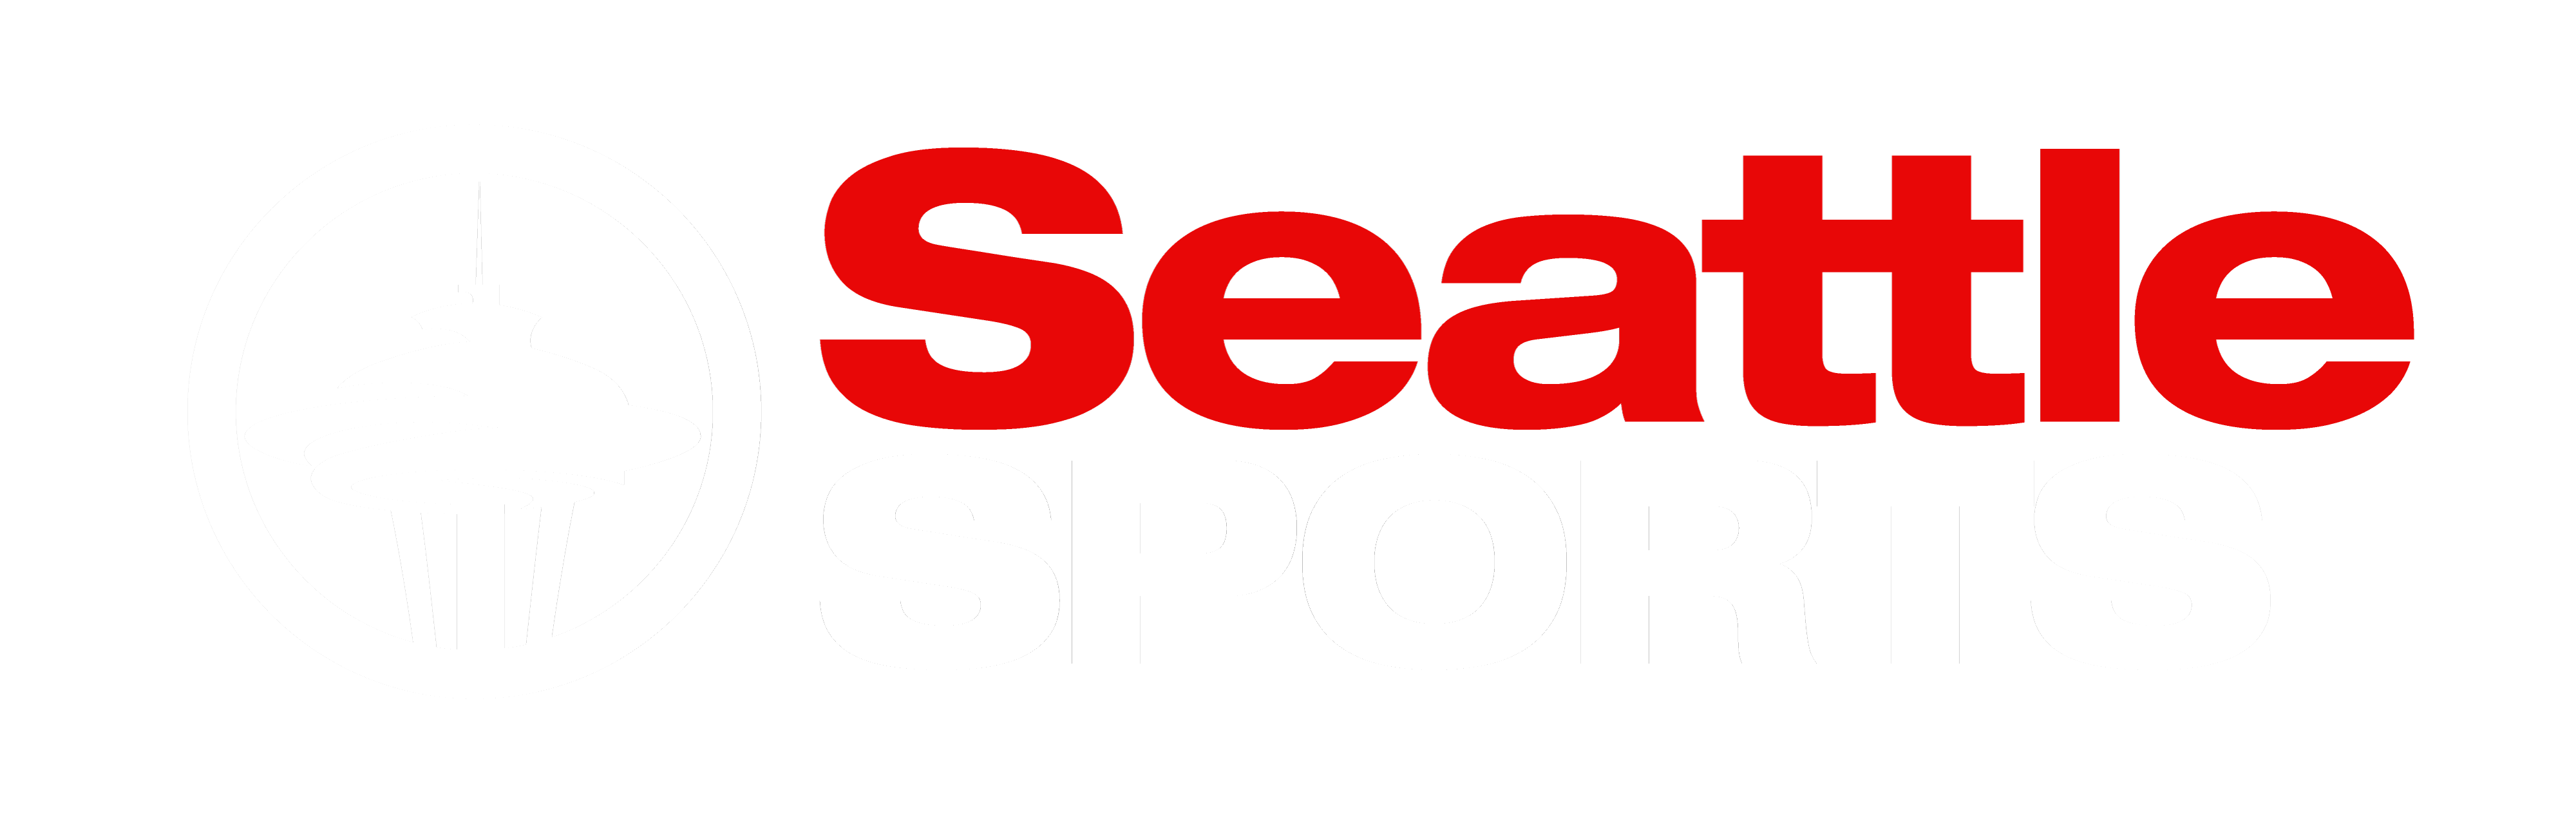 710 ESPN Seattle